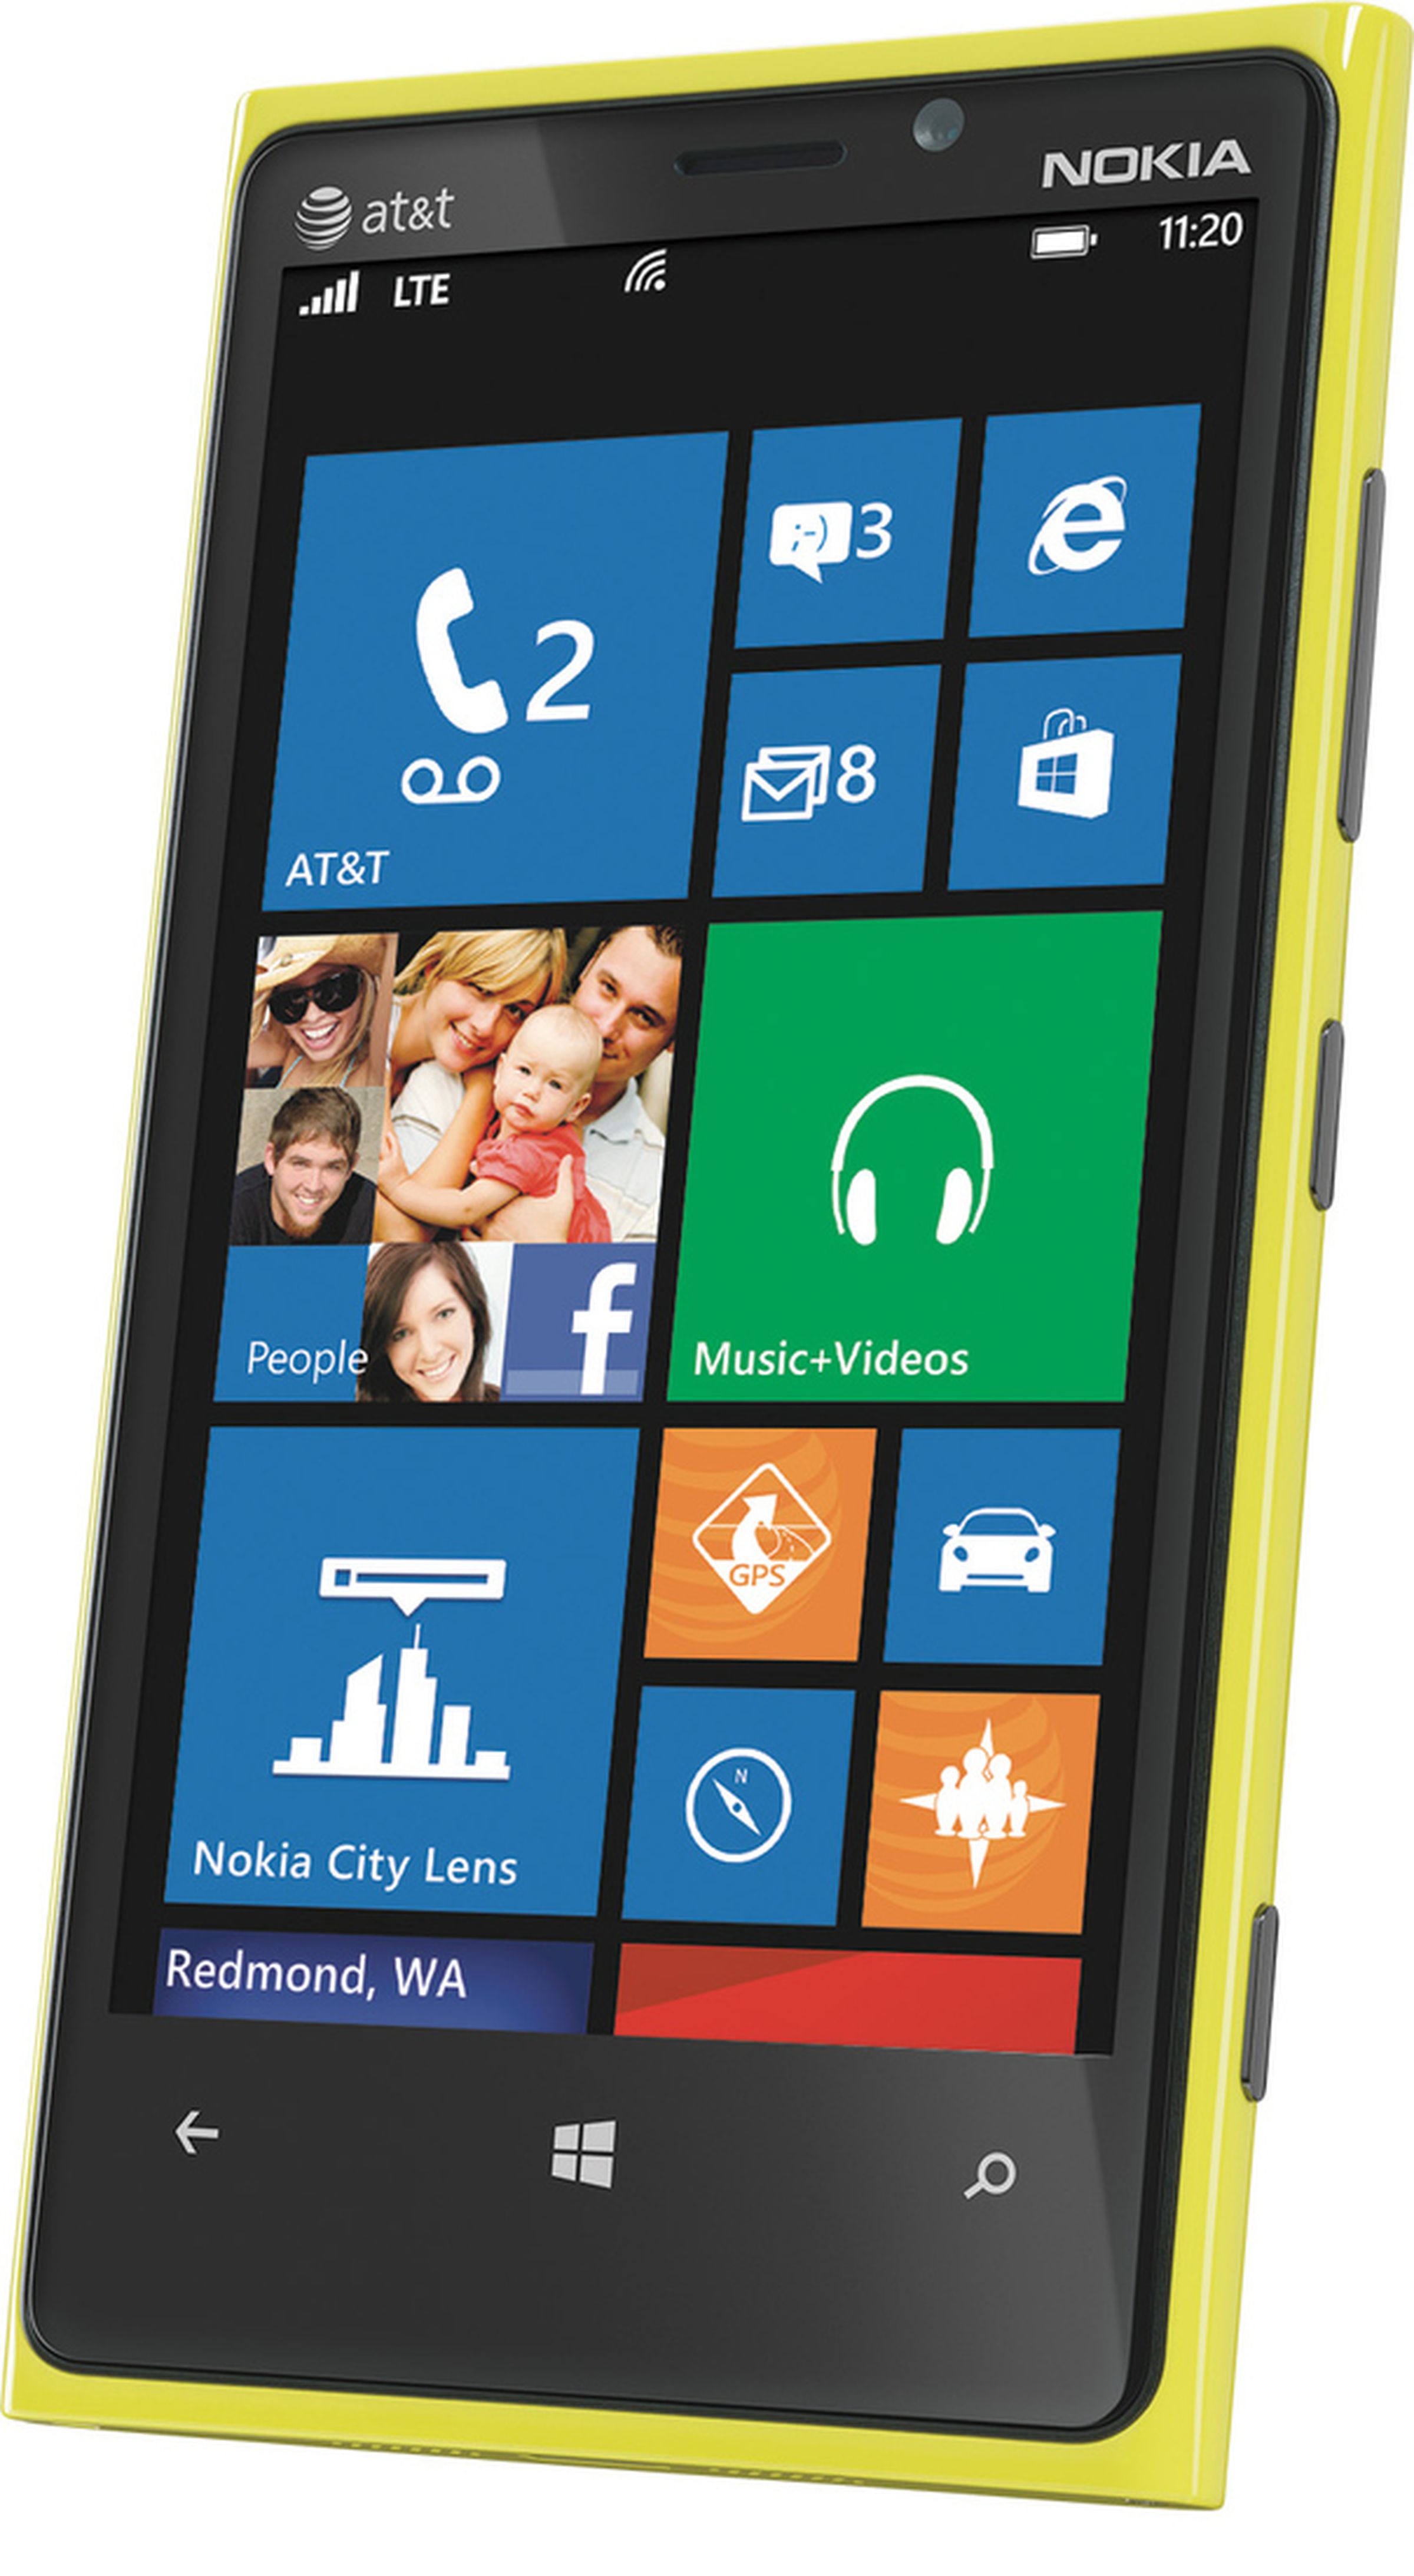 Nokia Lumia 920 AT&T press pictures